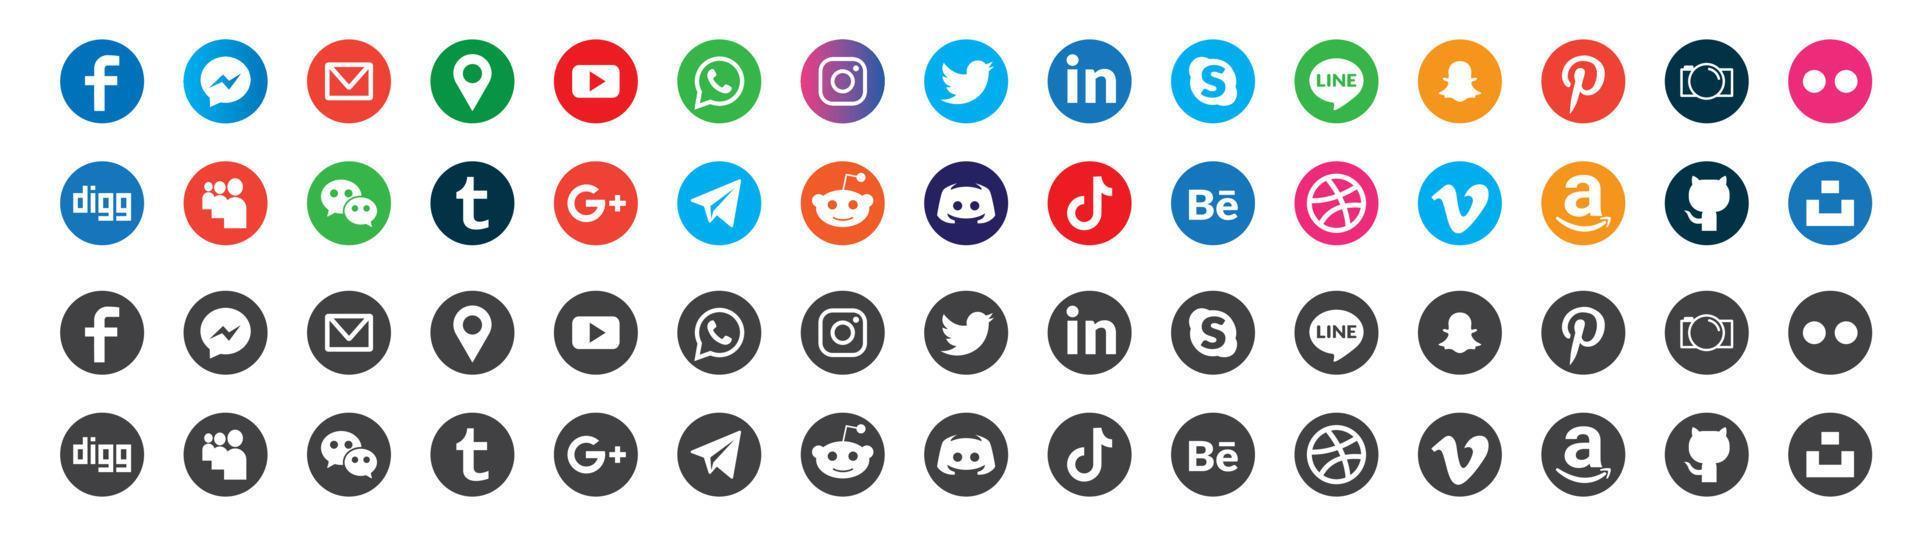 ensemble de logotypes de médias sociaux. facebook instagram twitter youtube snapchat whatsap pinterest linkedin vimeo tiktok periscope logo set. vecteur d'icône de réseau social